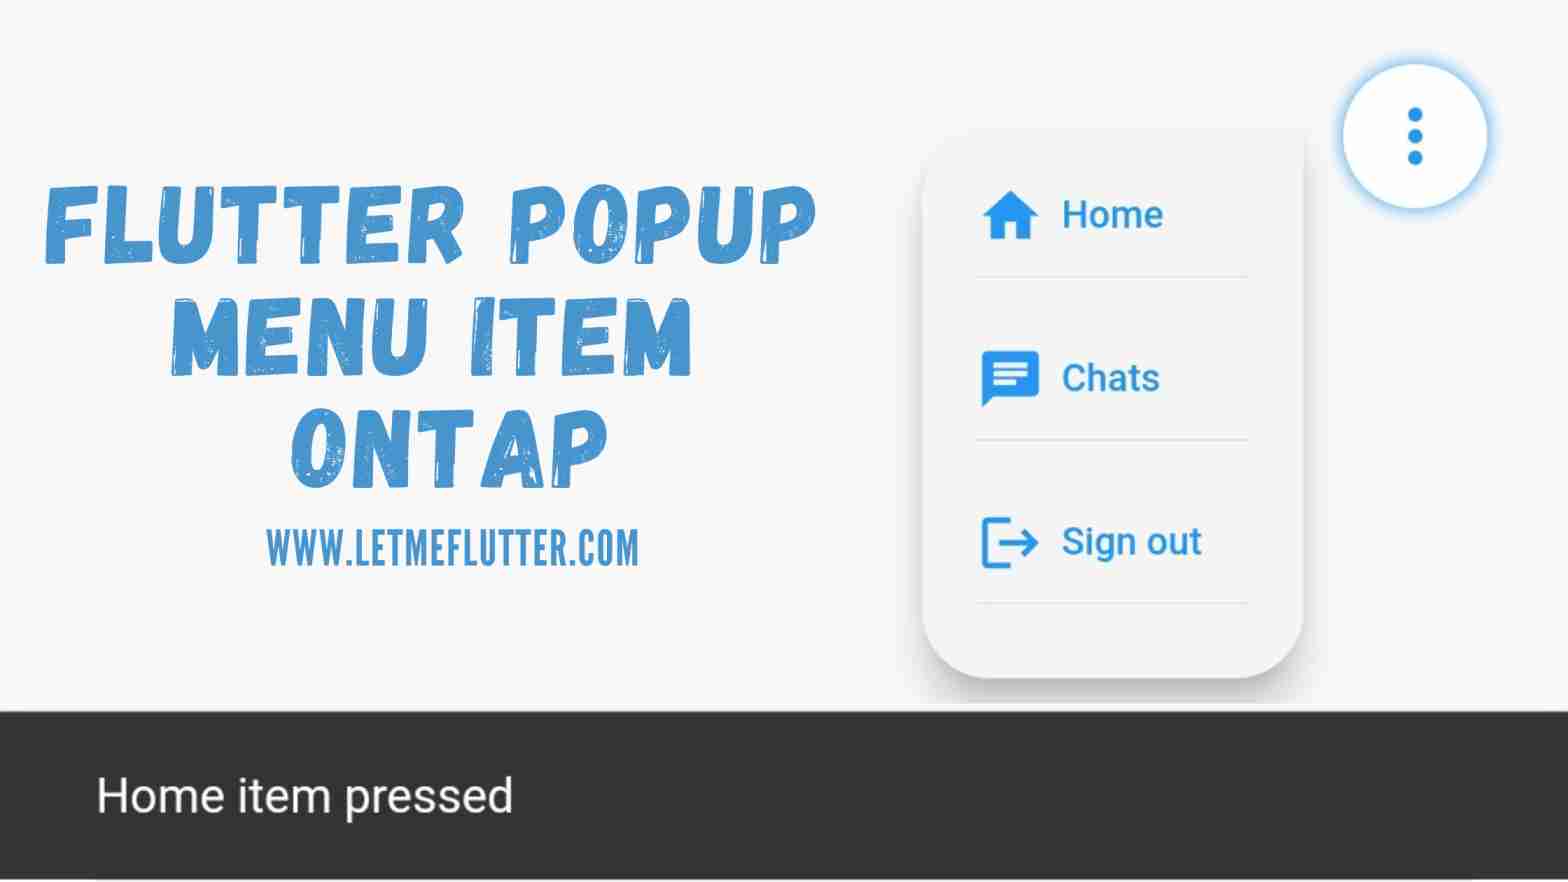 Flutter popup menu item ontap